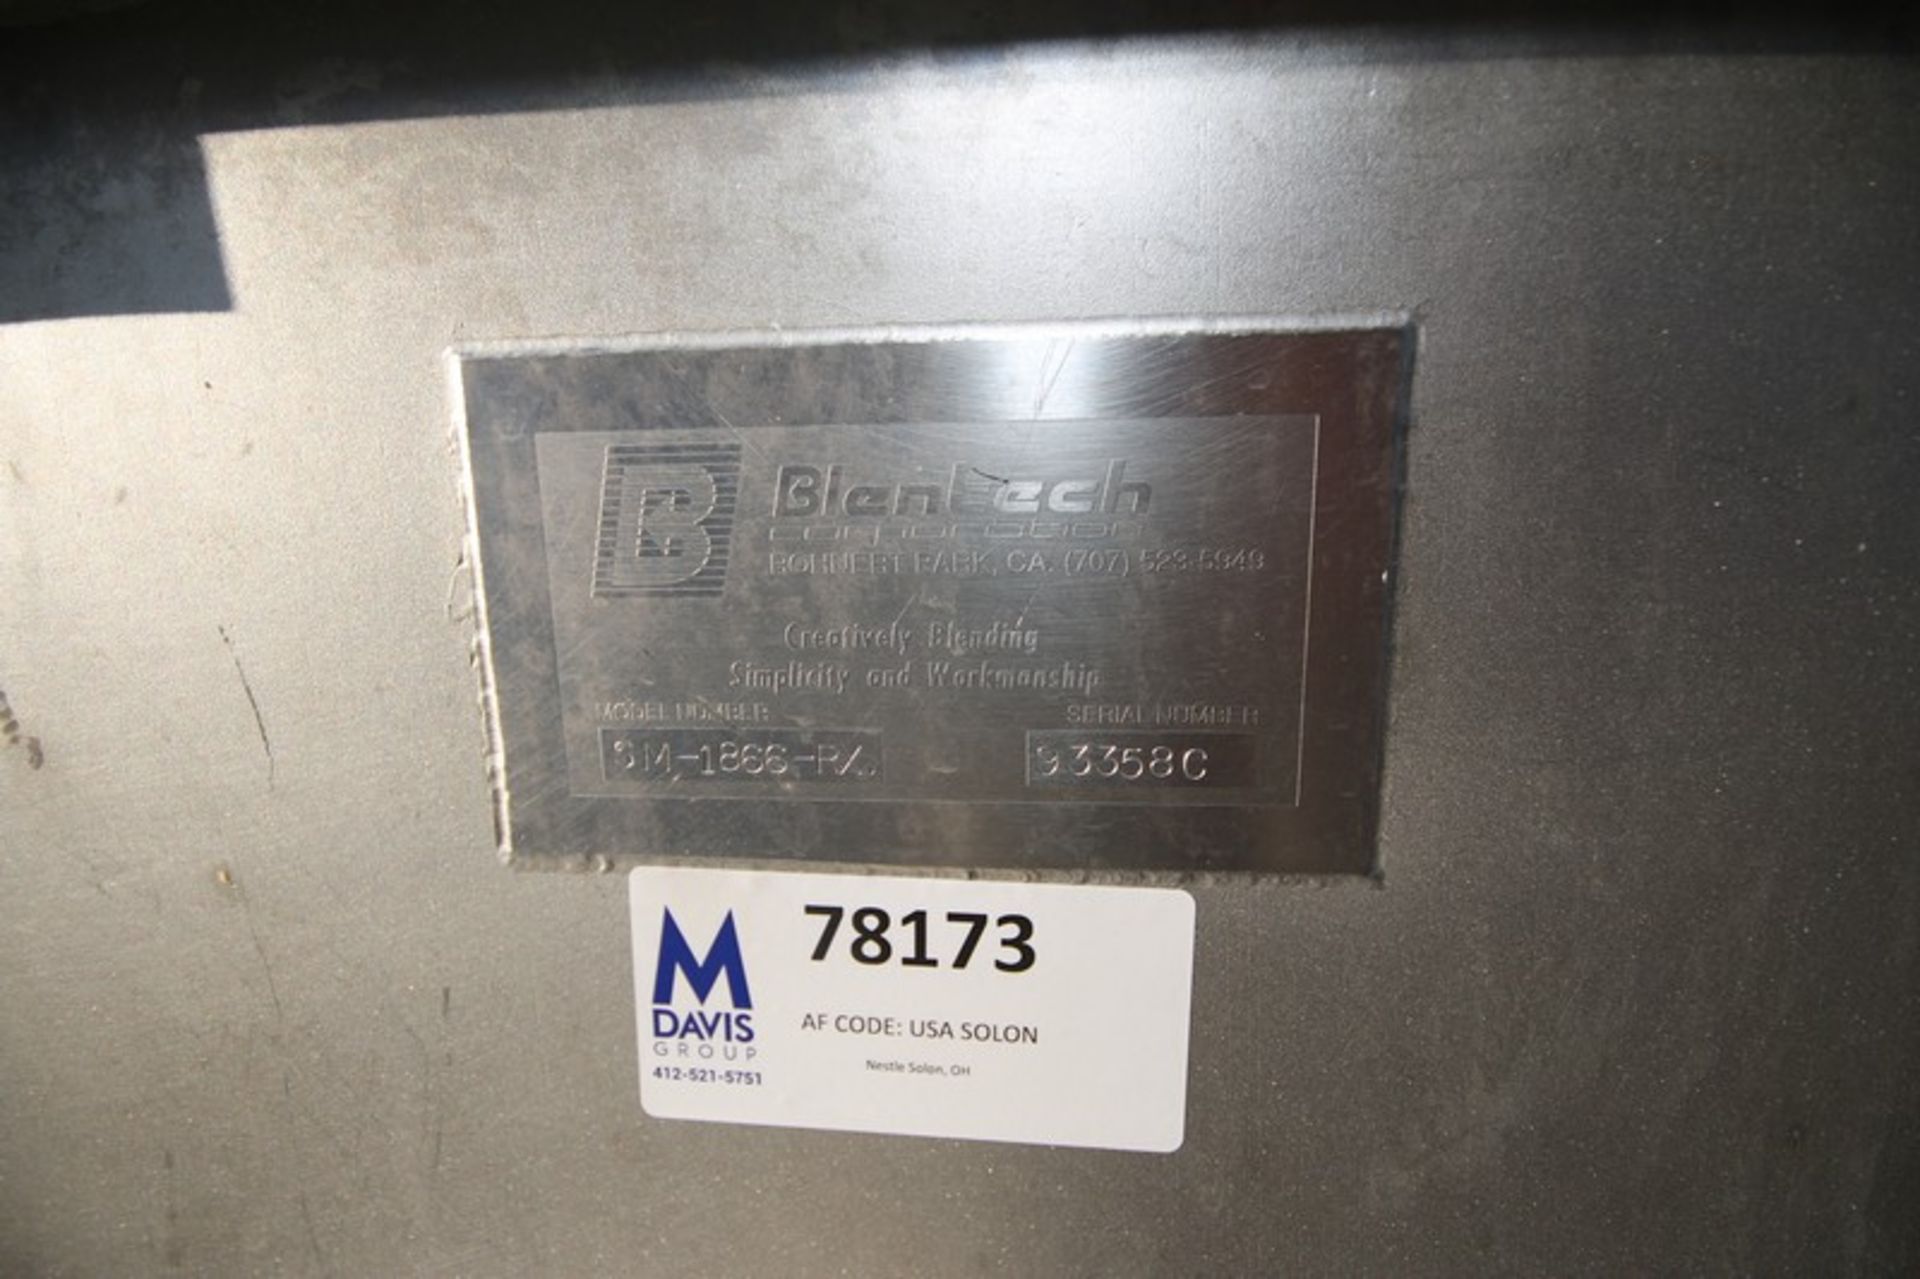 Blentech S/S Ribbon Blender, M/N SM1866-RX, S/N 93358C, with S/S Single Wall Blending Chamber, - Image 4 of 7